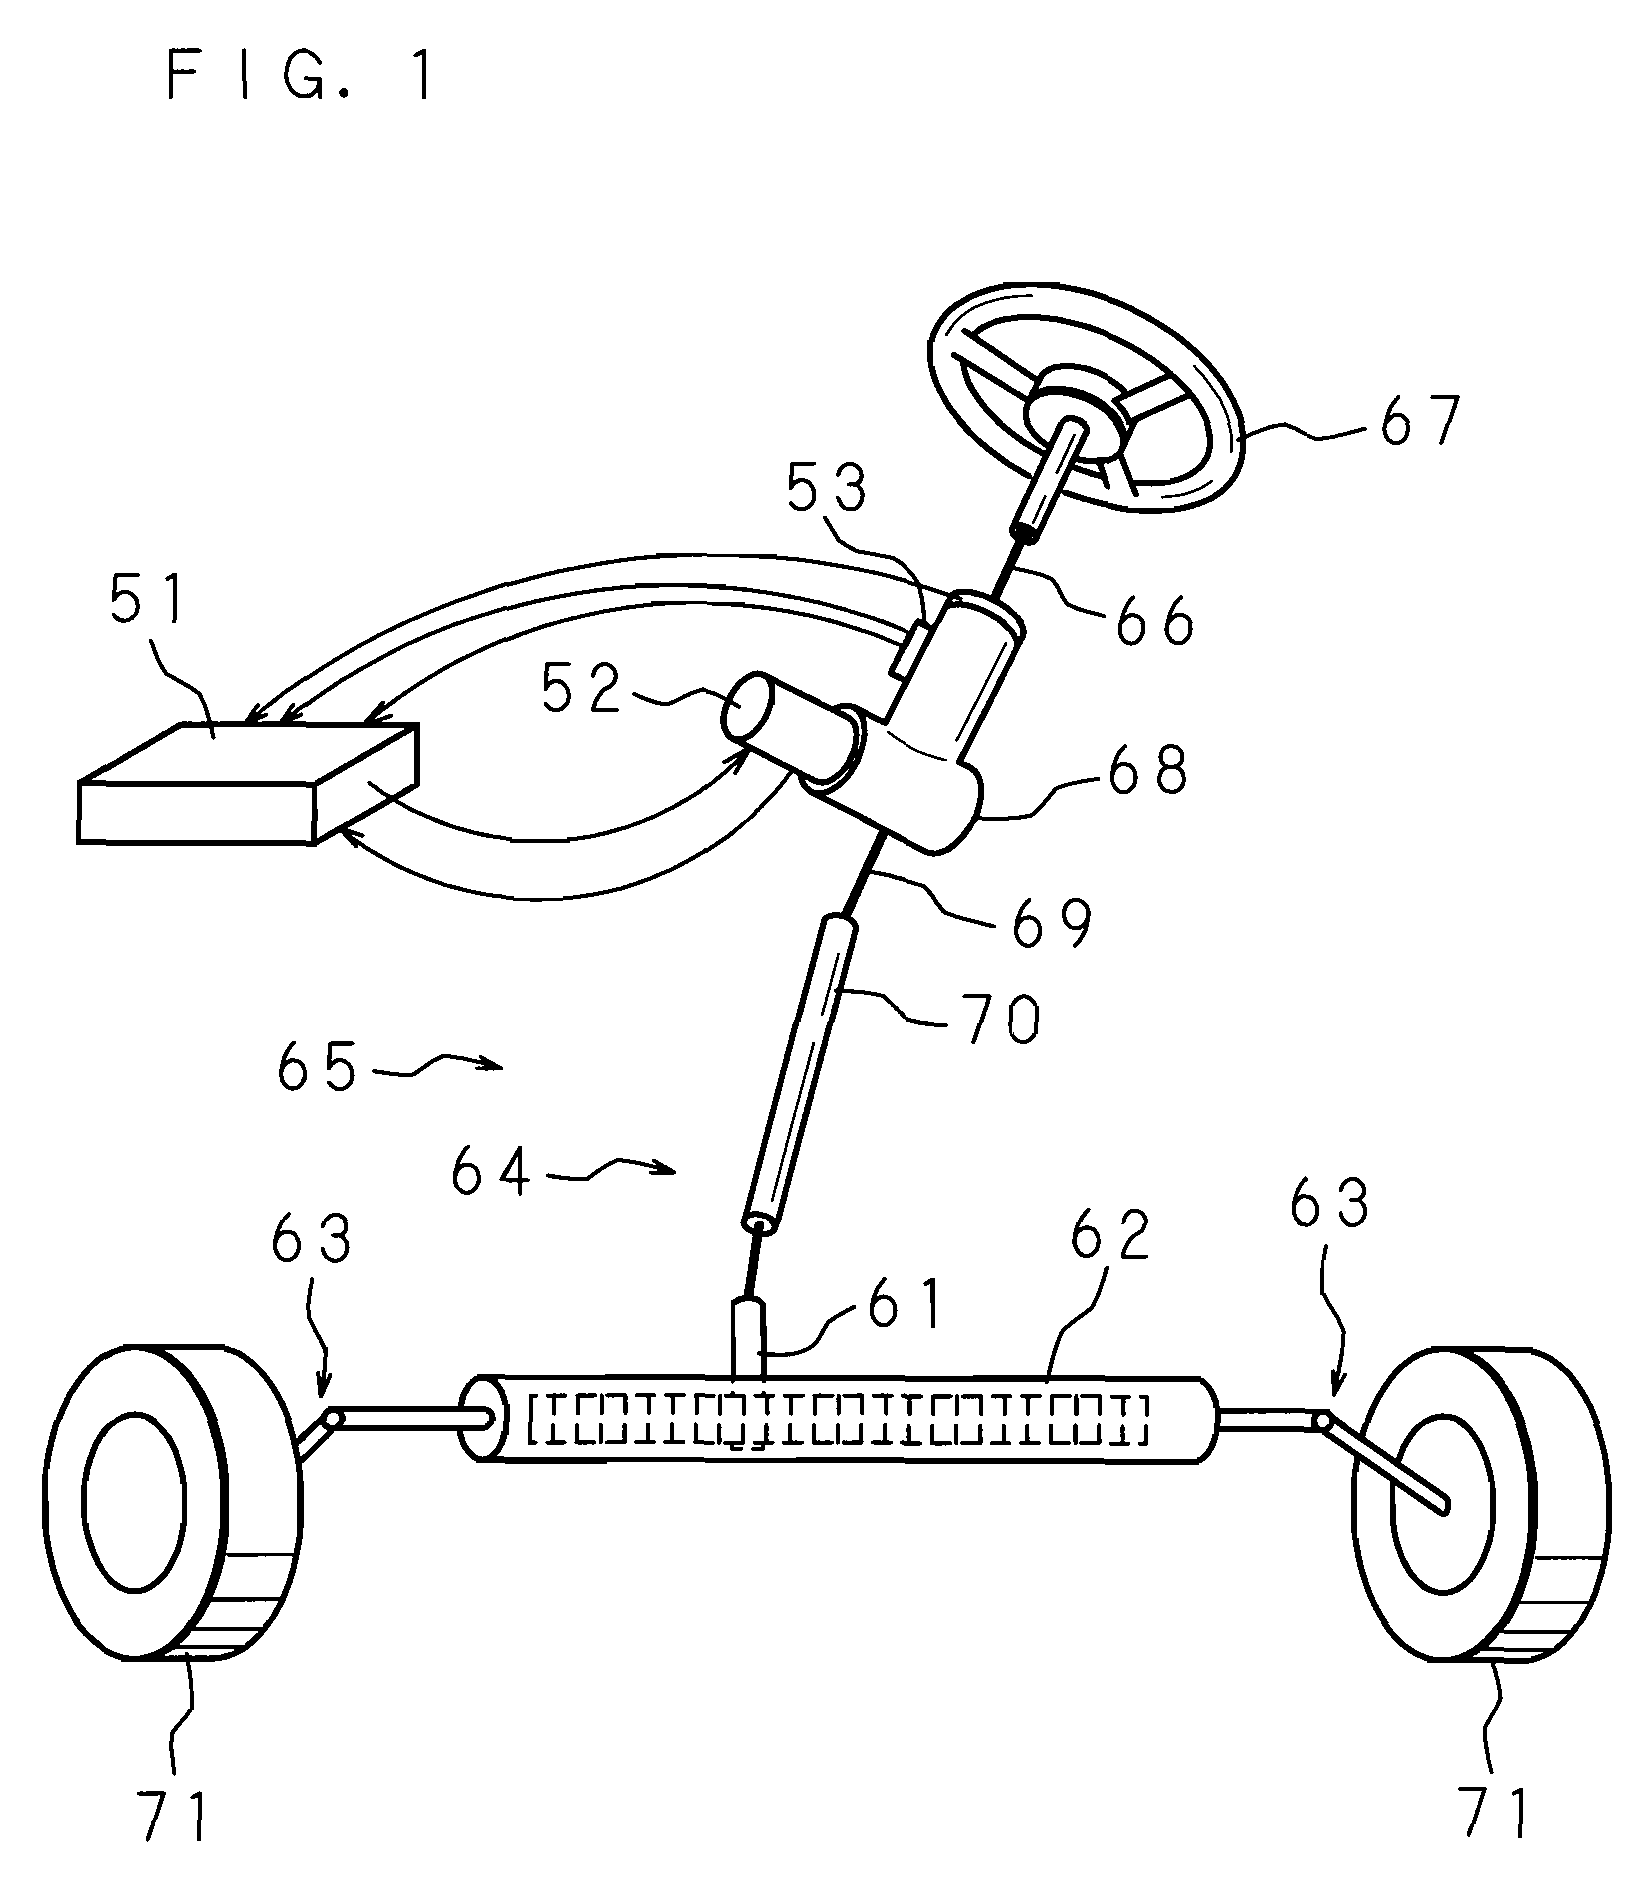 Electric power steering apparatus